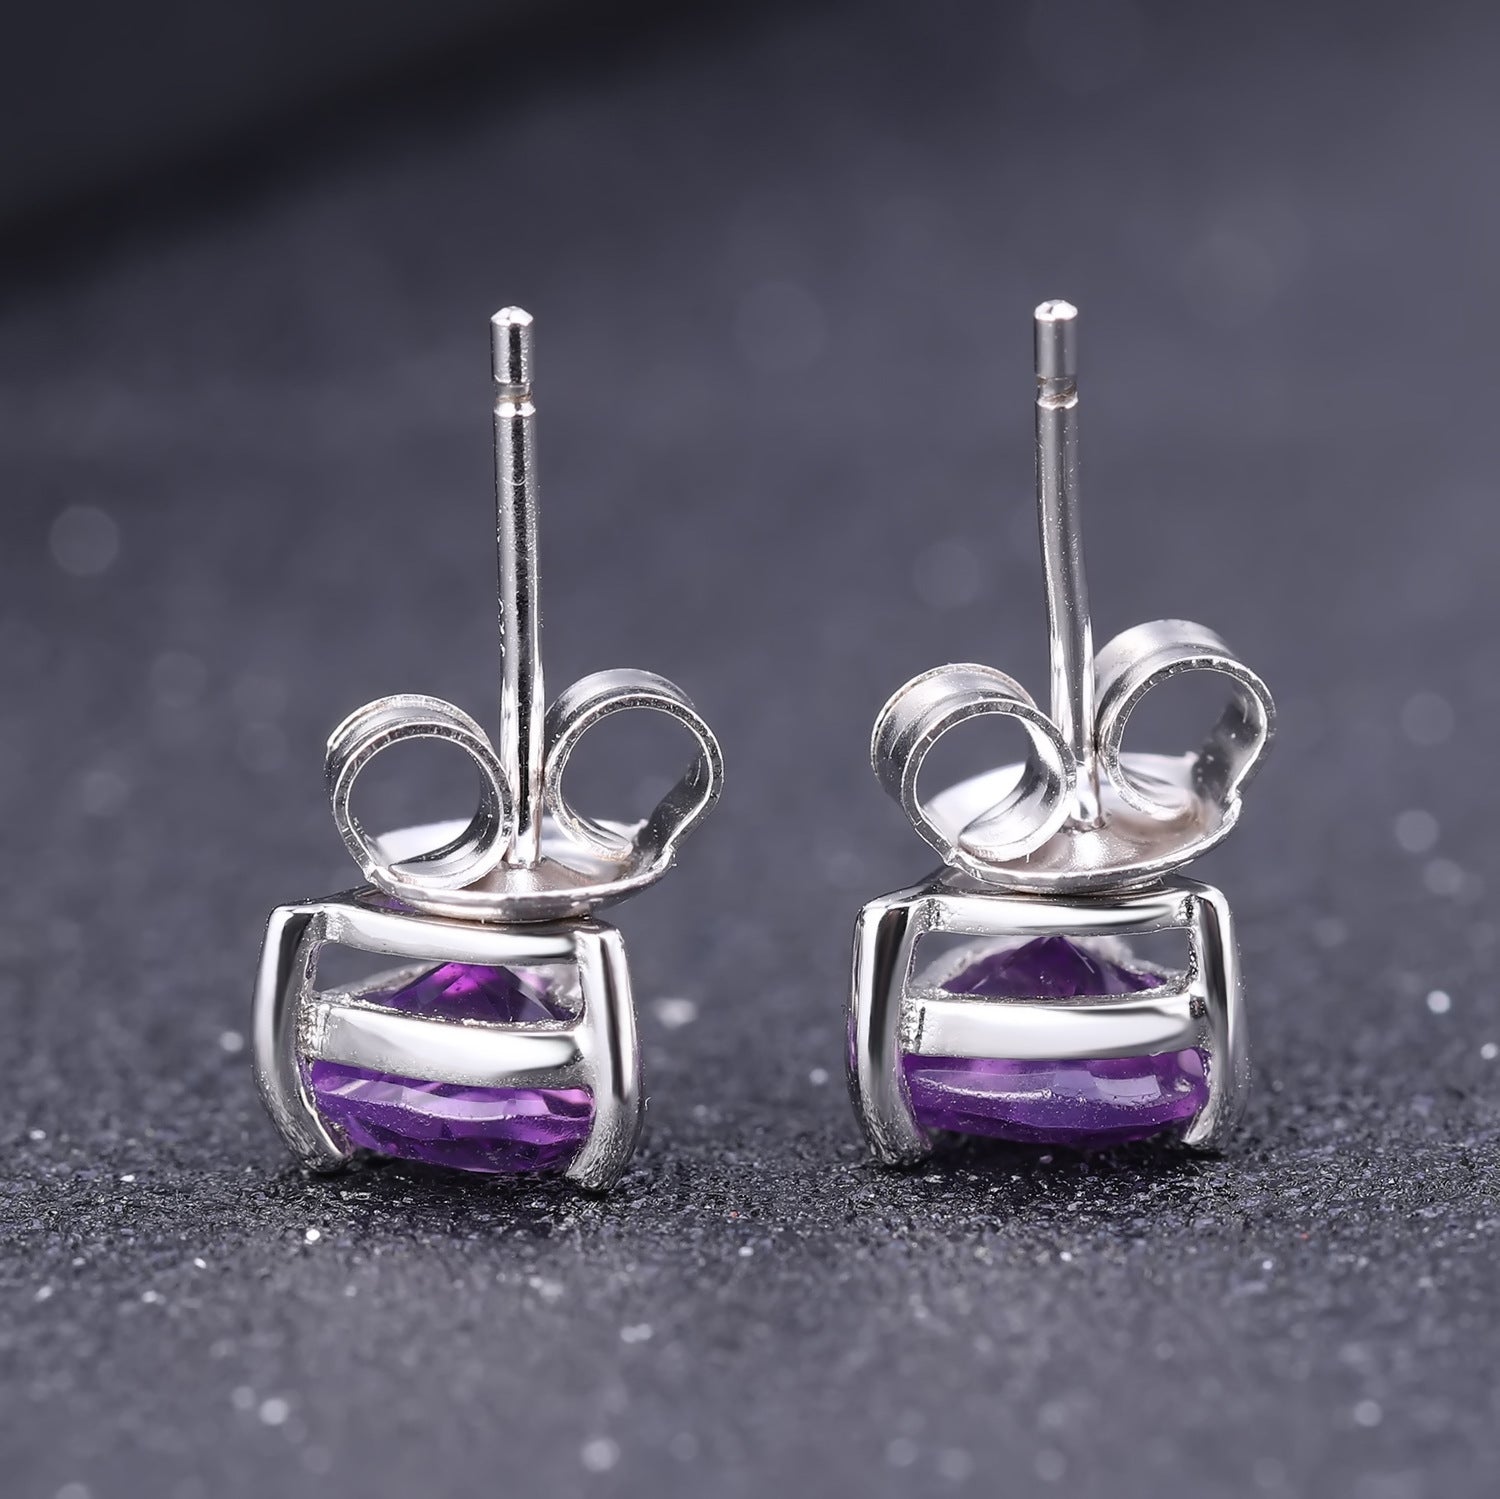 European Natural Gemstone Solitaire Heart Shape Sterling Silver Studs Earrings for Women